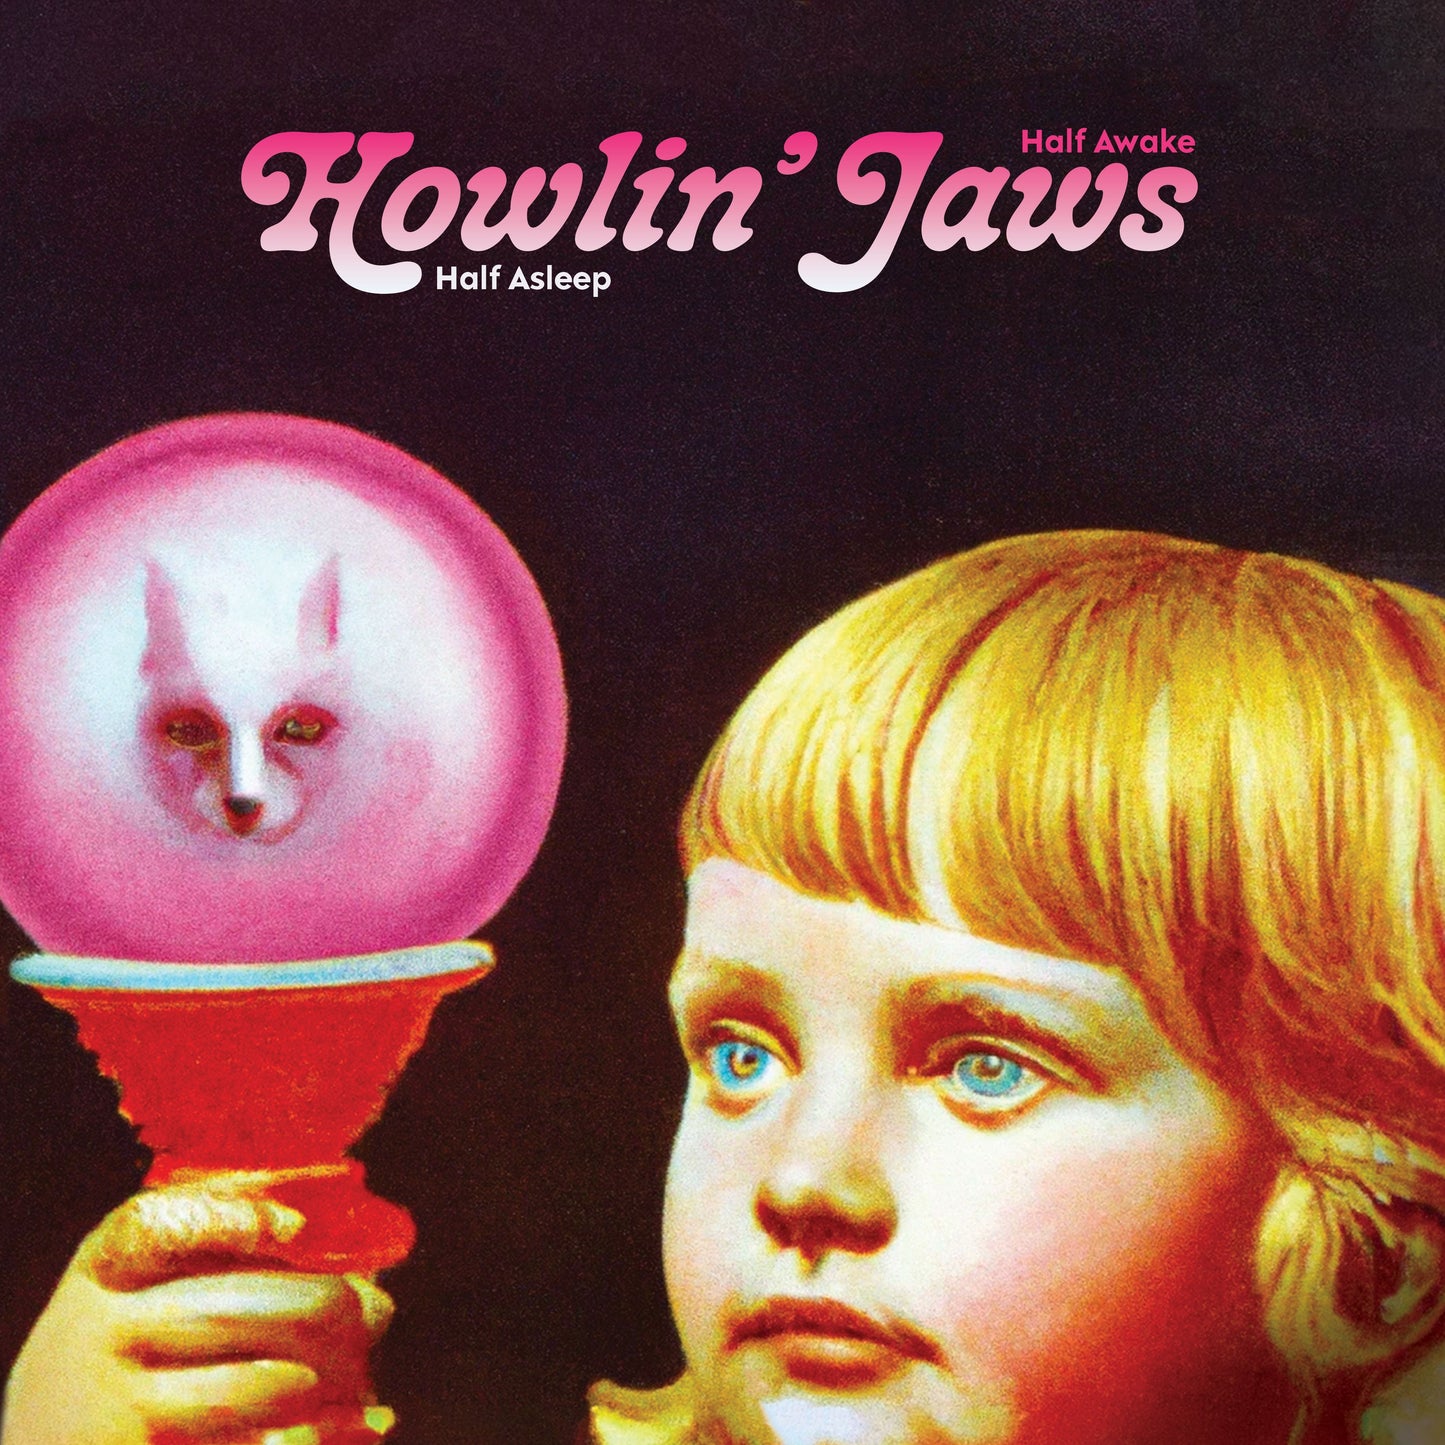 COMMANDE VINYLE 33T de « HALF ASLEEP HALF AWAKE » nouvel album de Howlin' Jaws